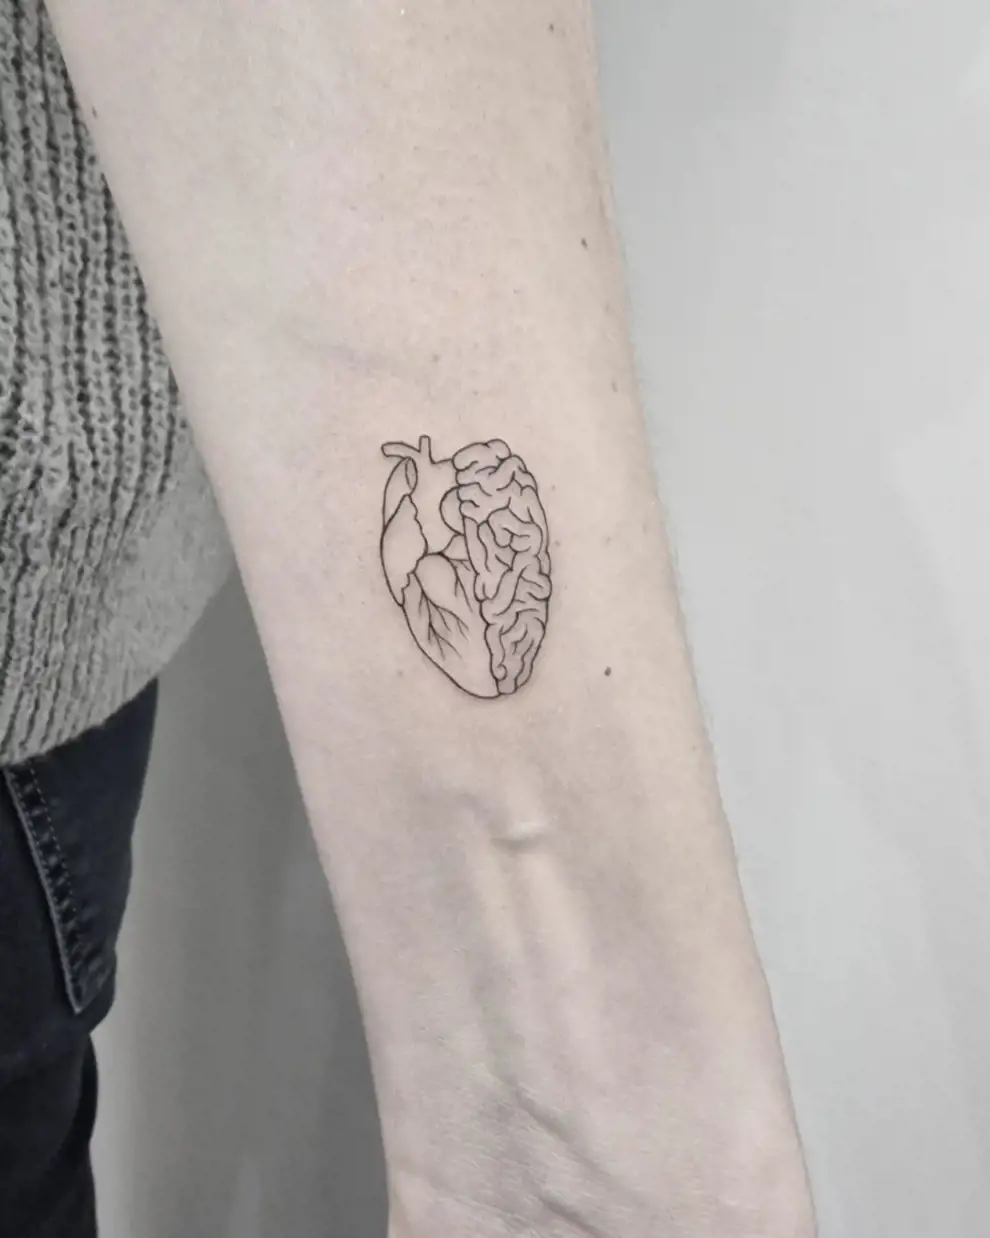 Tatuajes minimalistas mujer: ¿corazón o cerebro?